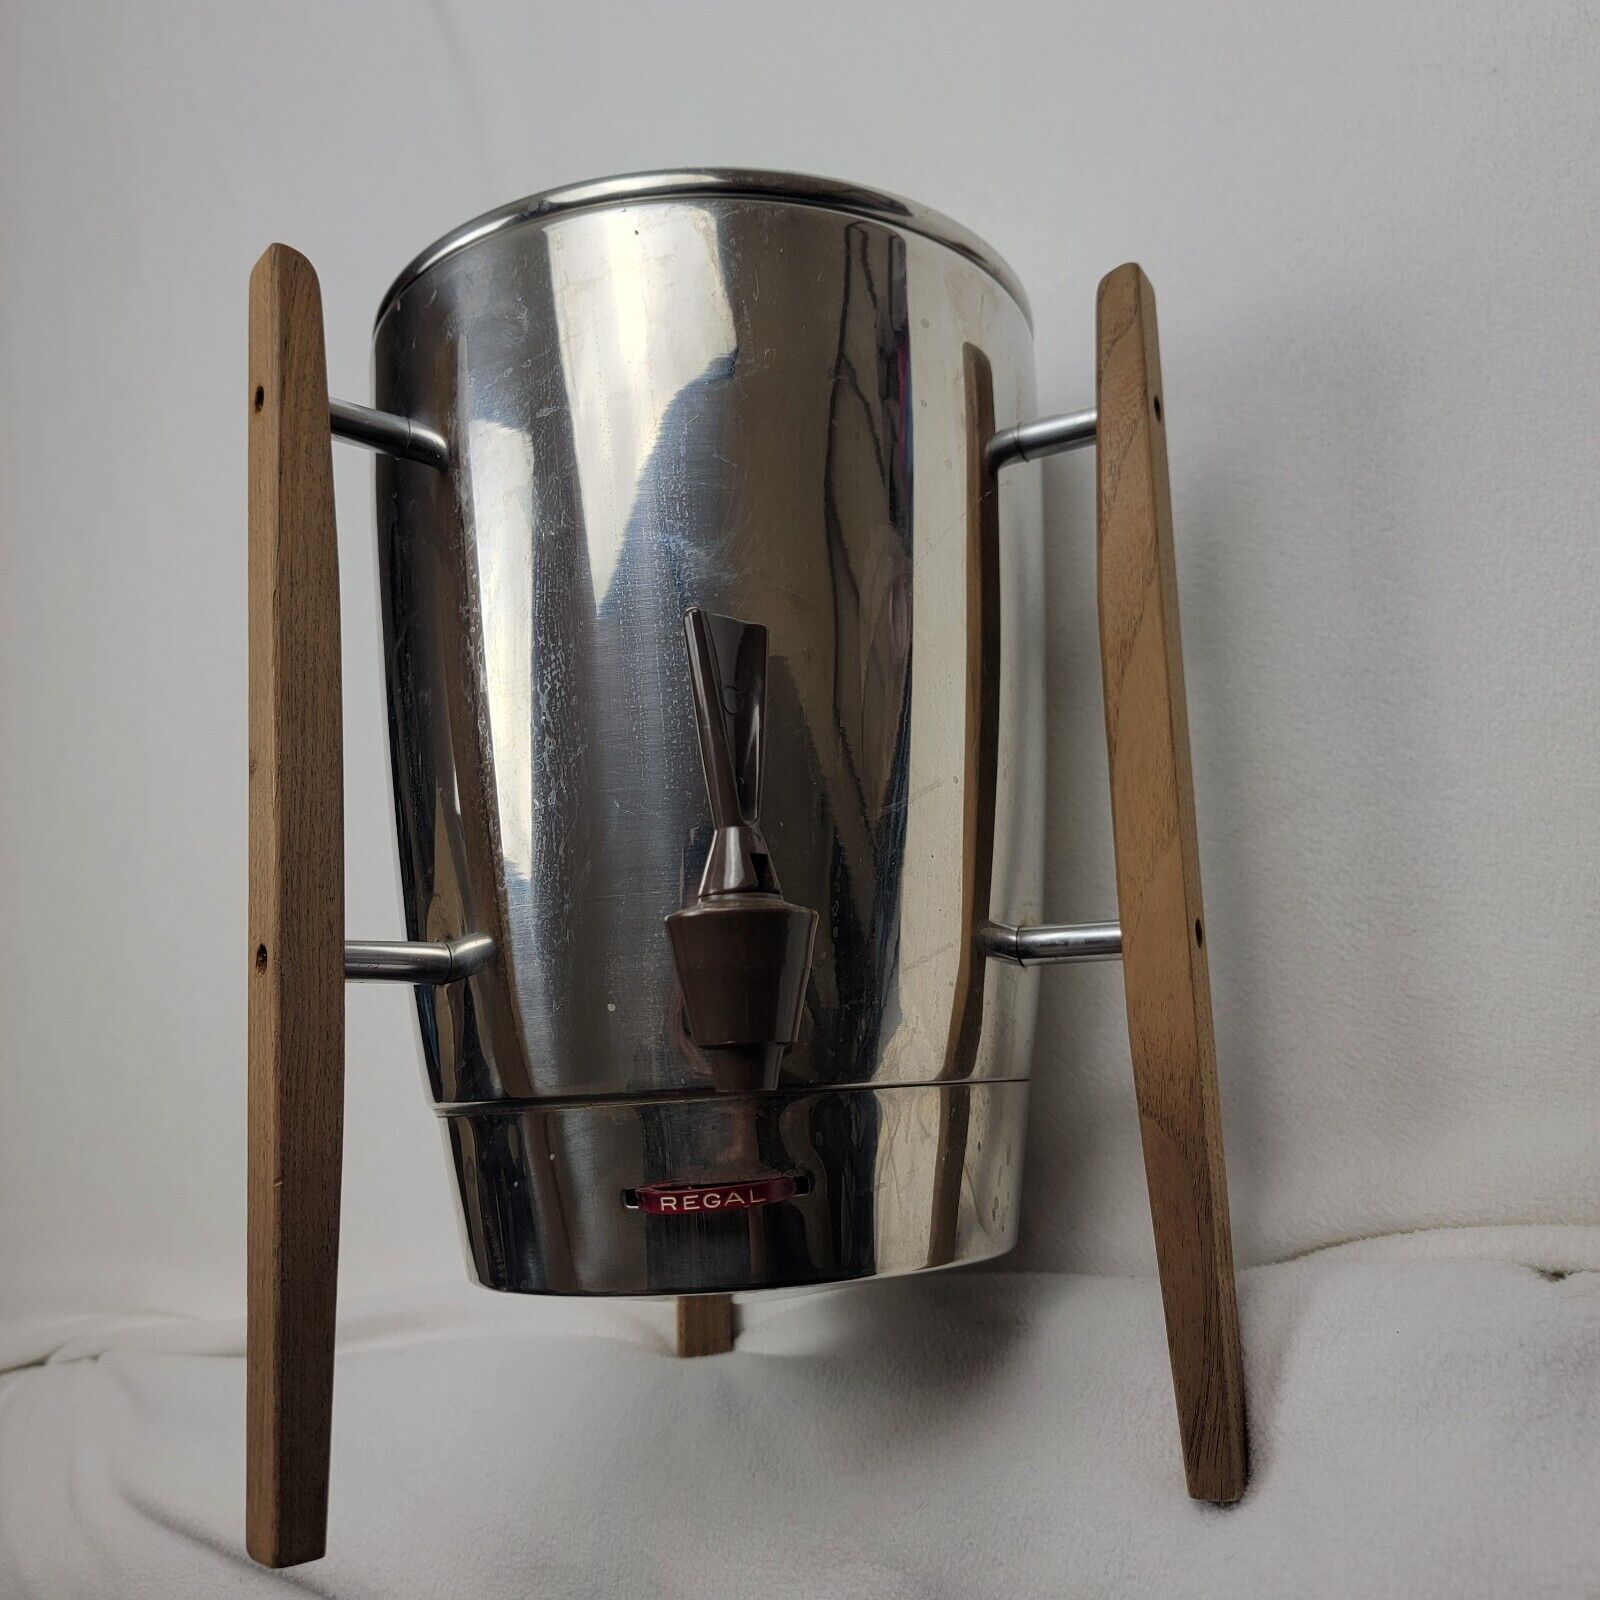 Vintage 40 Cup REGAL Mid Century Modern Space Age Rocket Percolator Coffee Maker